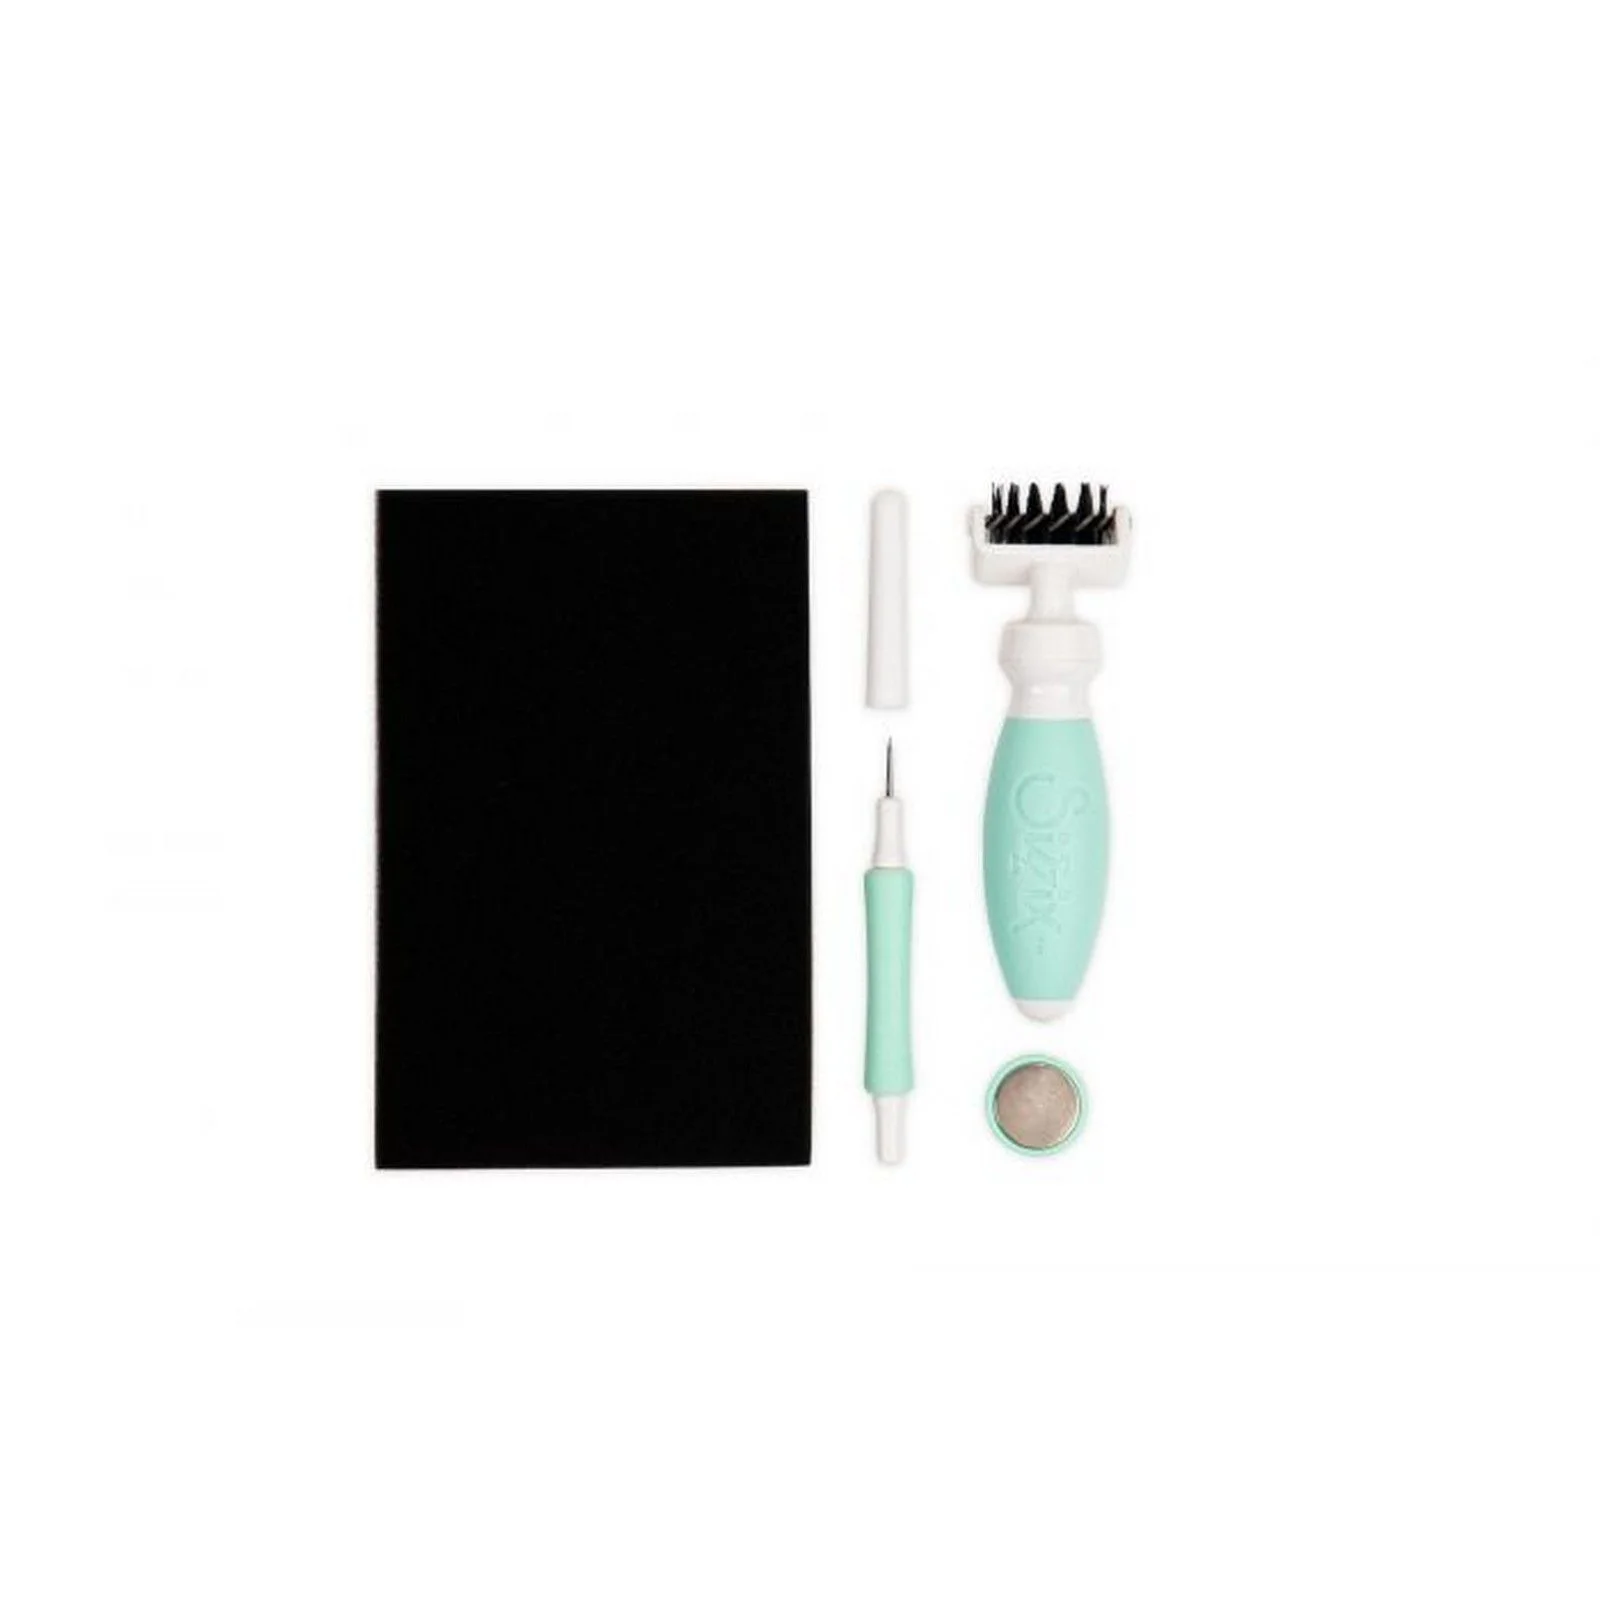  665061 Sizzix Accessory • Making Tool Die Brush & Die Pick Kit Mint Julep